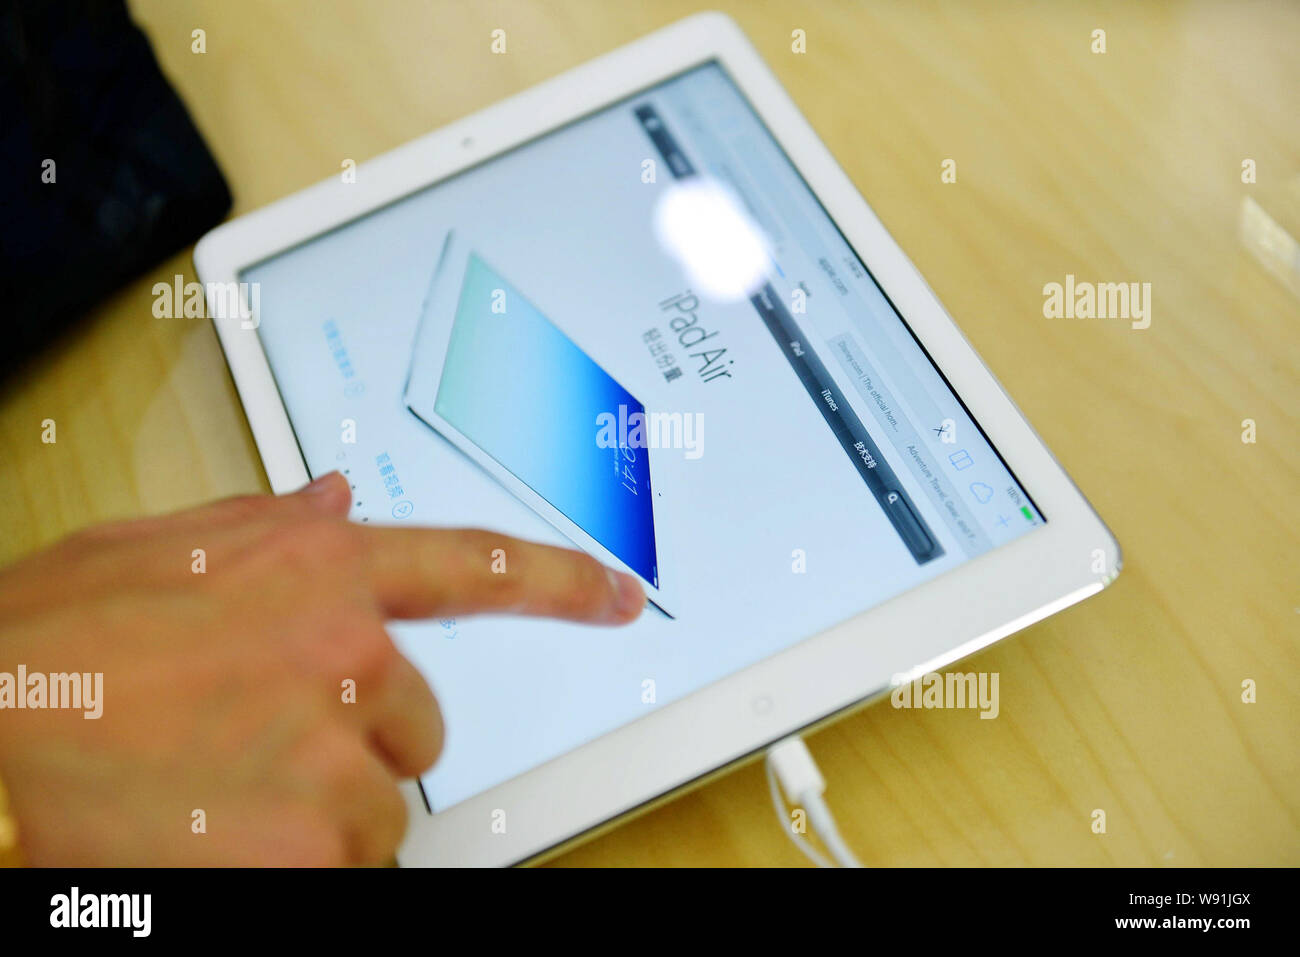 Apple ipad air 1 -Fotos und -Bildmaterial in hoher Auflösung – Alamy